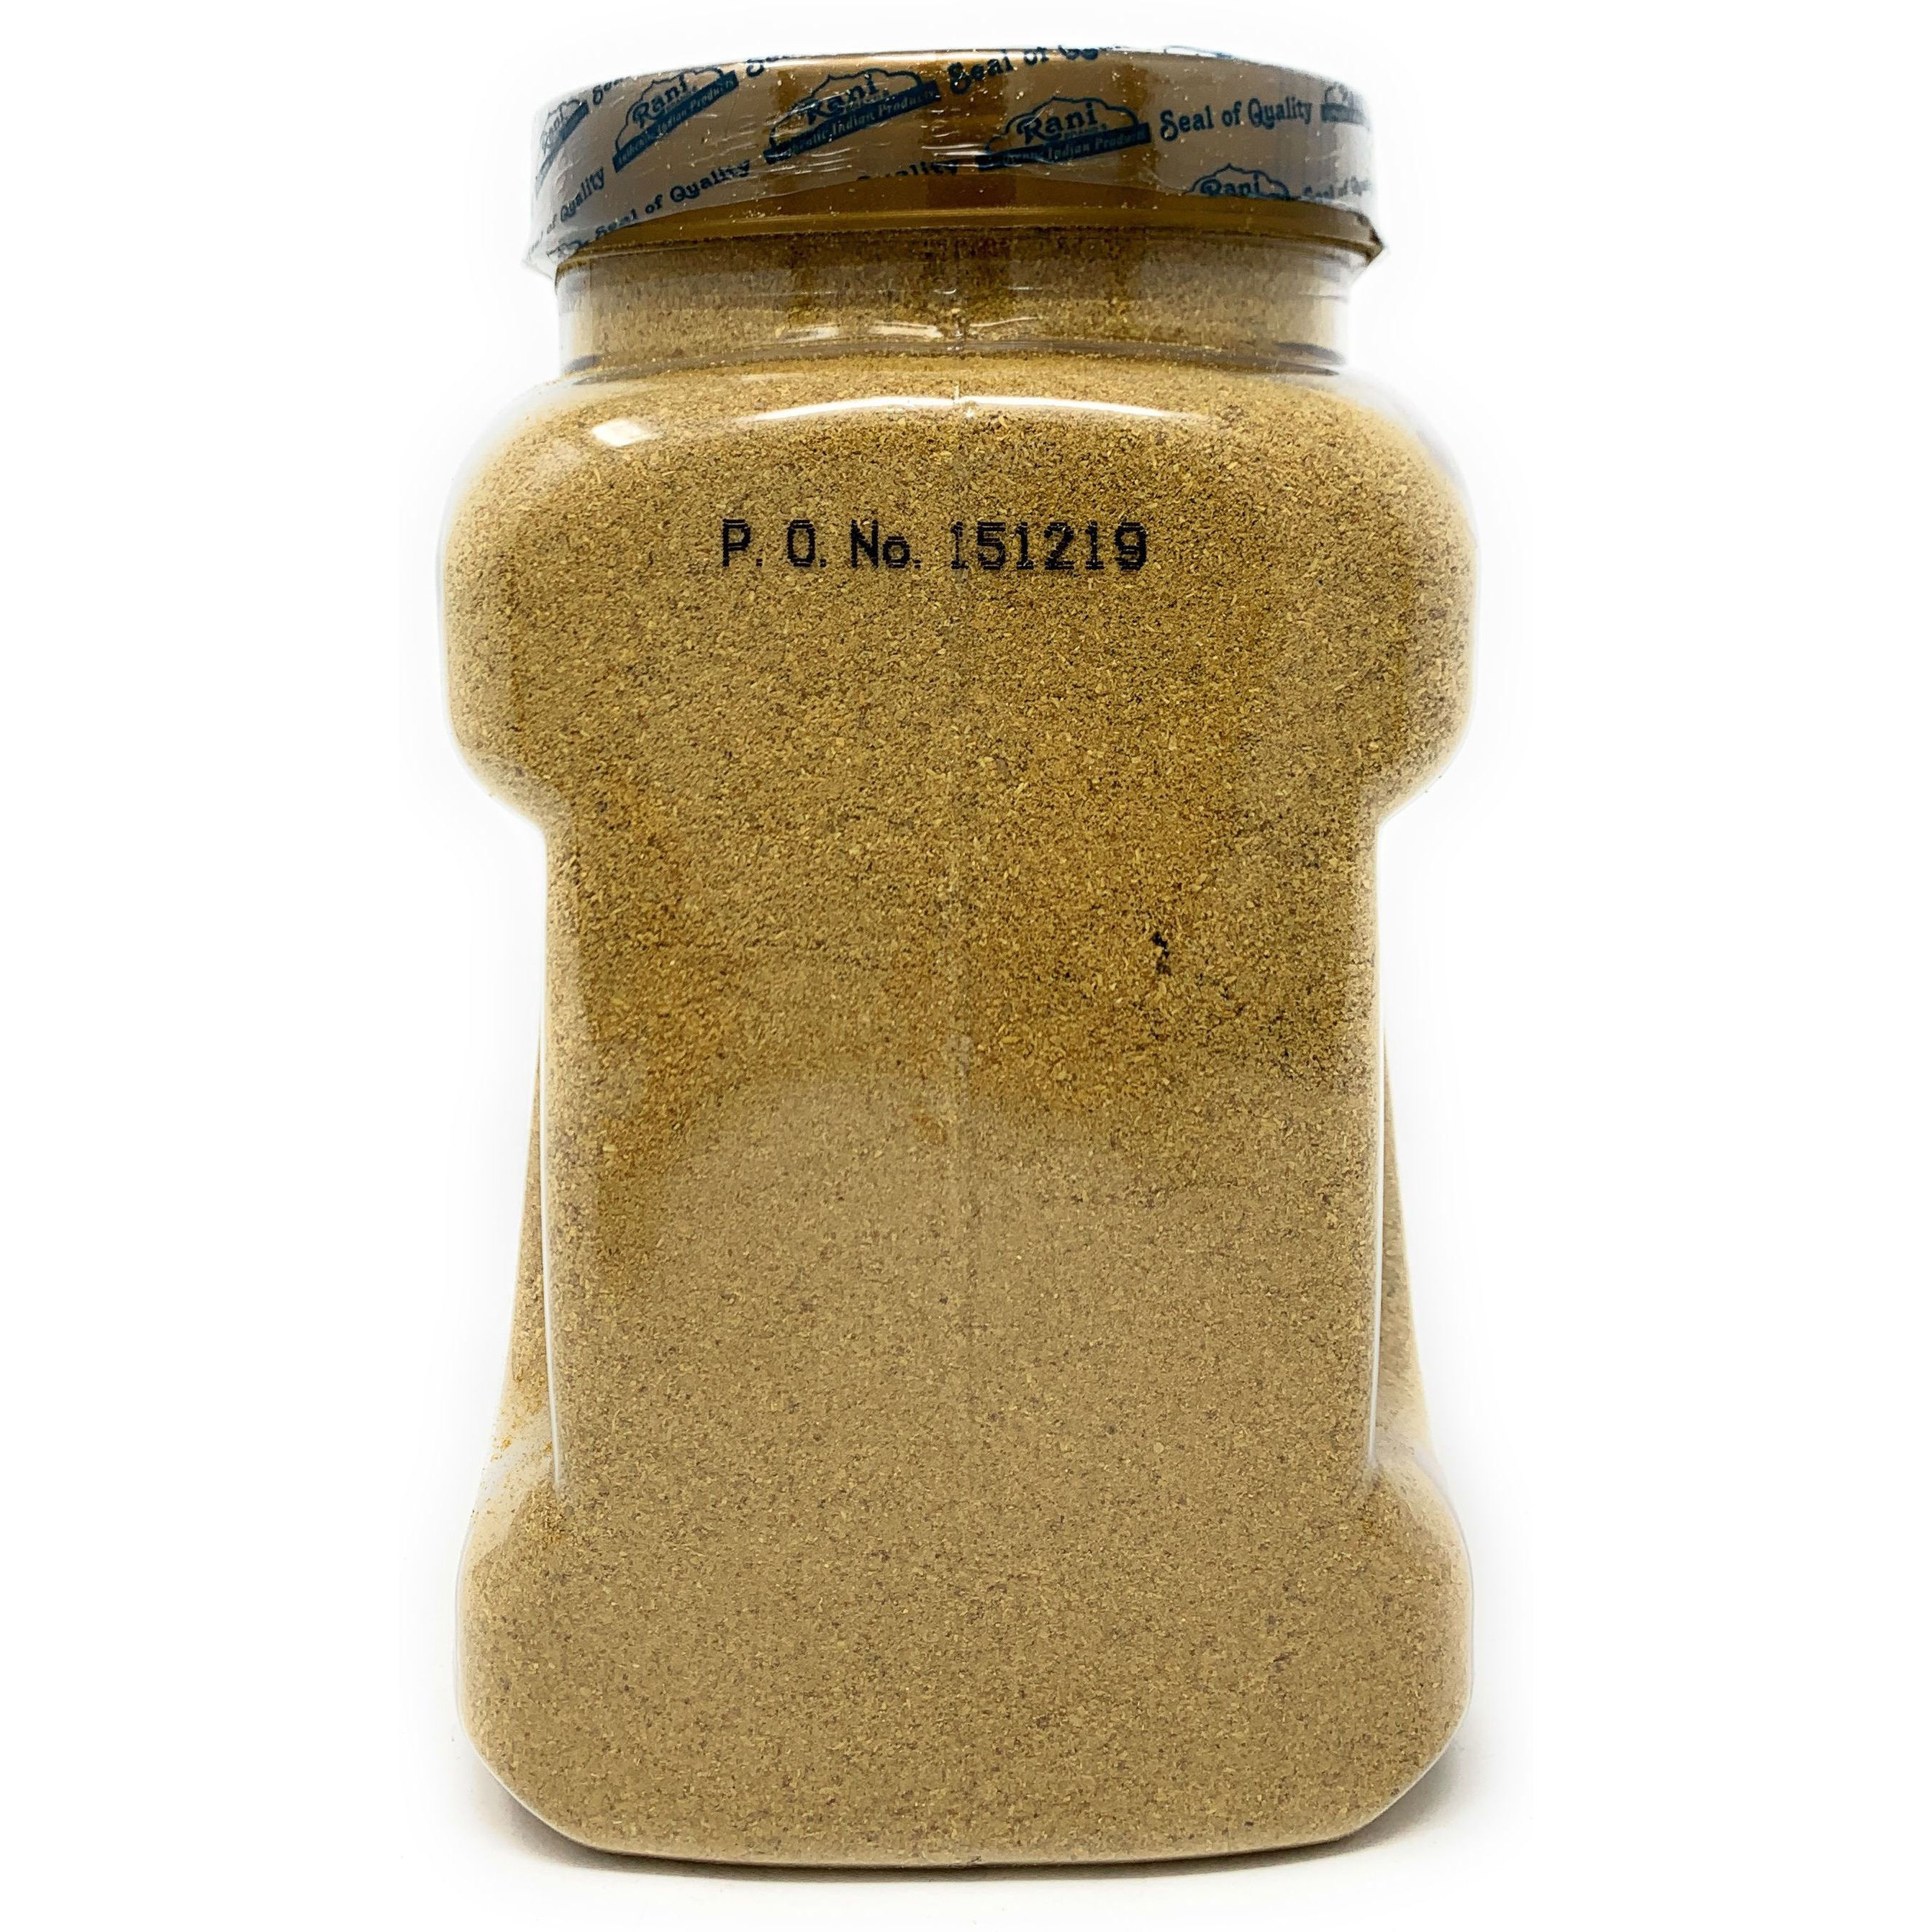 Rani Coriander Ground Powder (Indian Dhania) Spice 32oz (2lb) Bulk ~ All Natural, Salt-Free | Vegan | No Colors | Gluten Friendly | NON-GMO | Indian Origin